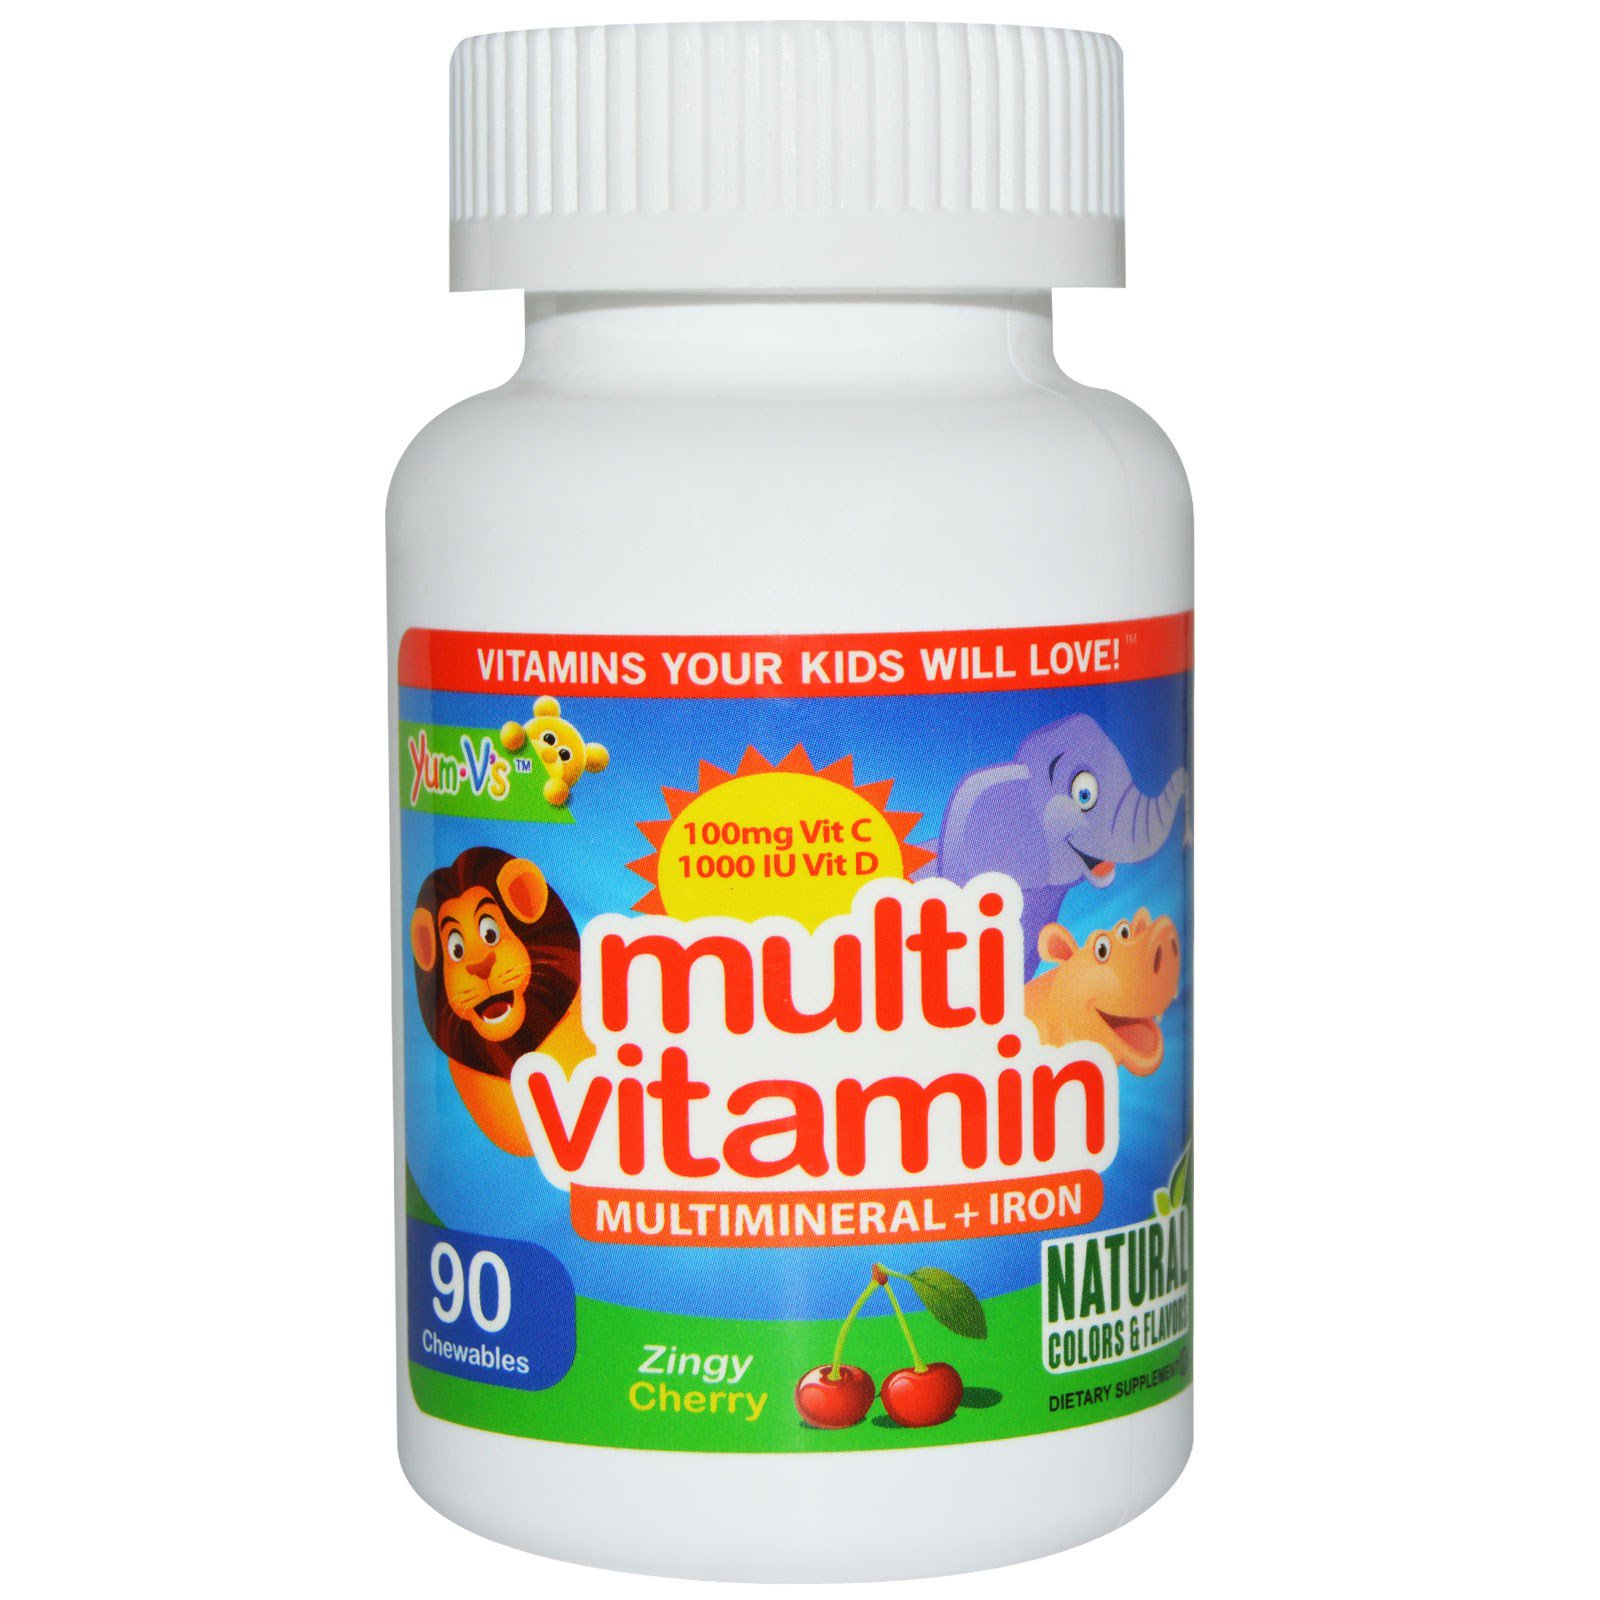 Yum-V's, Мультивитамин, мультиминерал + железо, вишня, 90 конфет